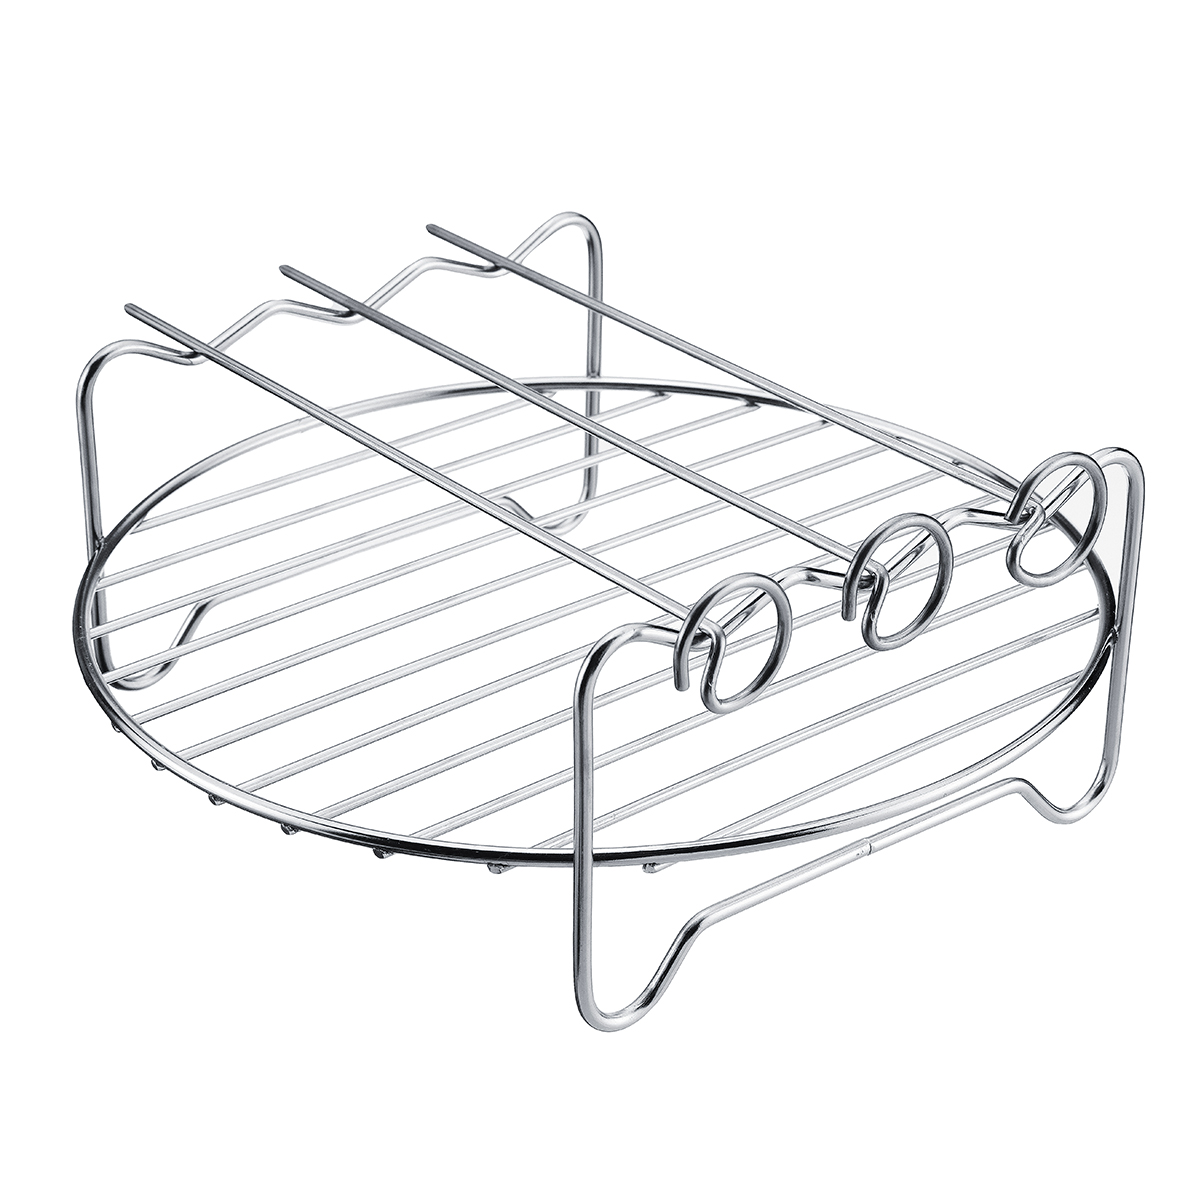 6pcs-9-Inch-Non-stick-Air-Fryer-Accessories-Set-Cake-Pizza-BBQ-Roast-Baking-Tools-For-53-68QT-Air-Fr-1543527-4